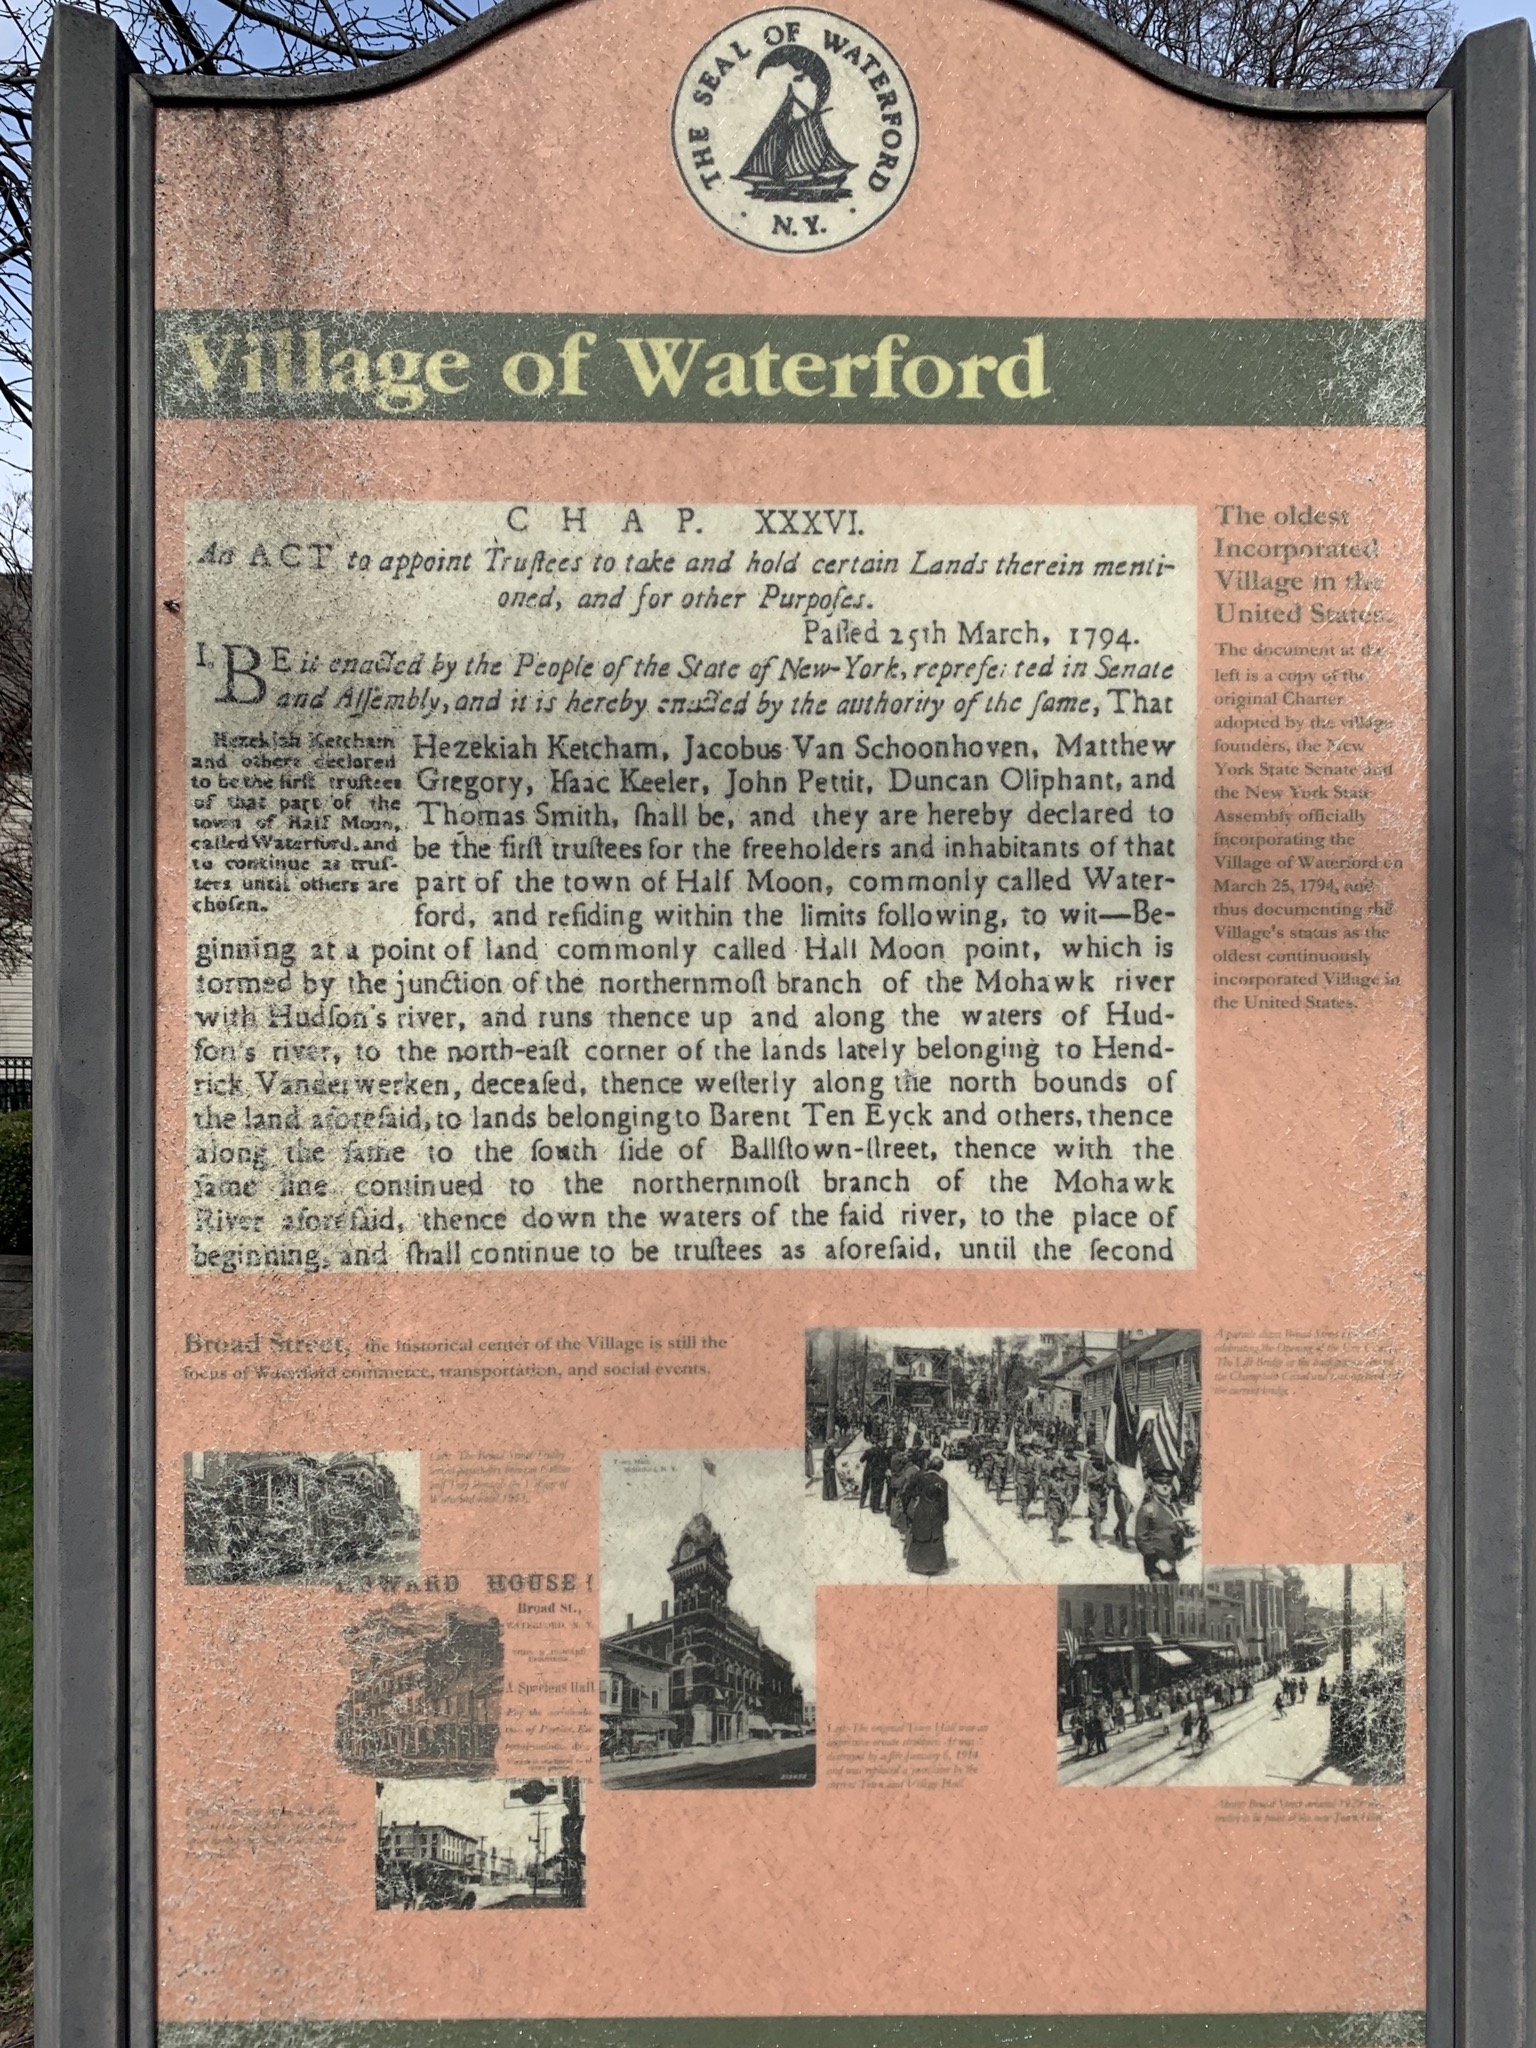 Village of Waterford Marker